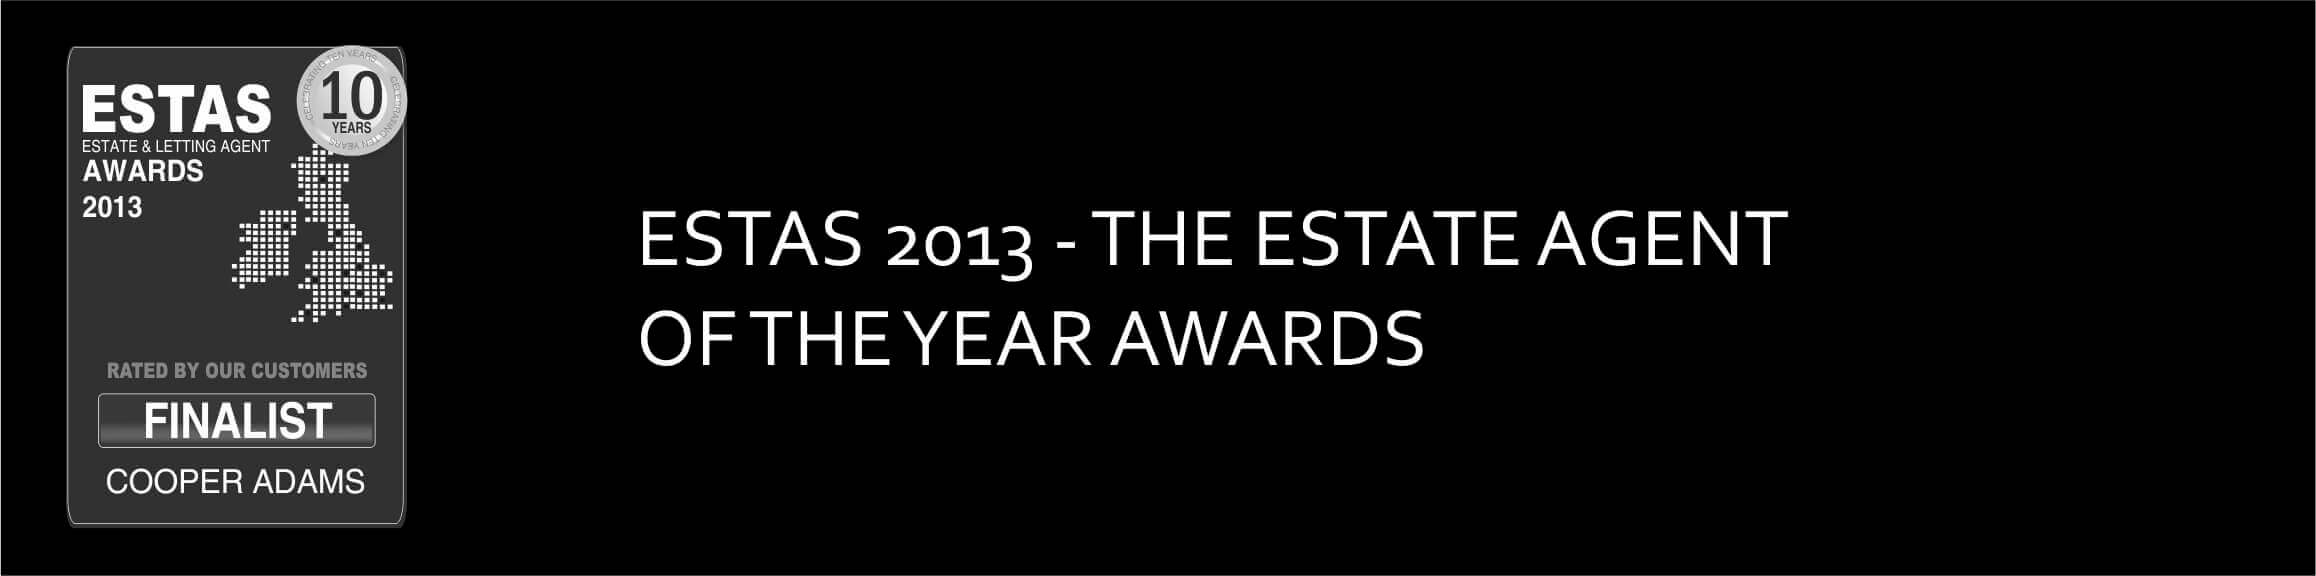 ESTAS Estate Agent of the Year Awards 2013